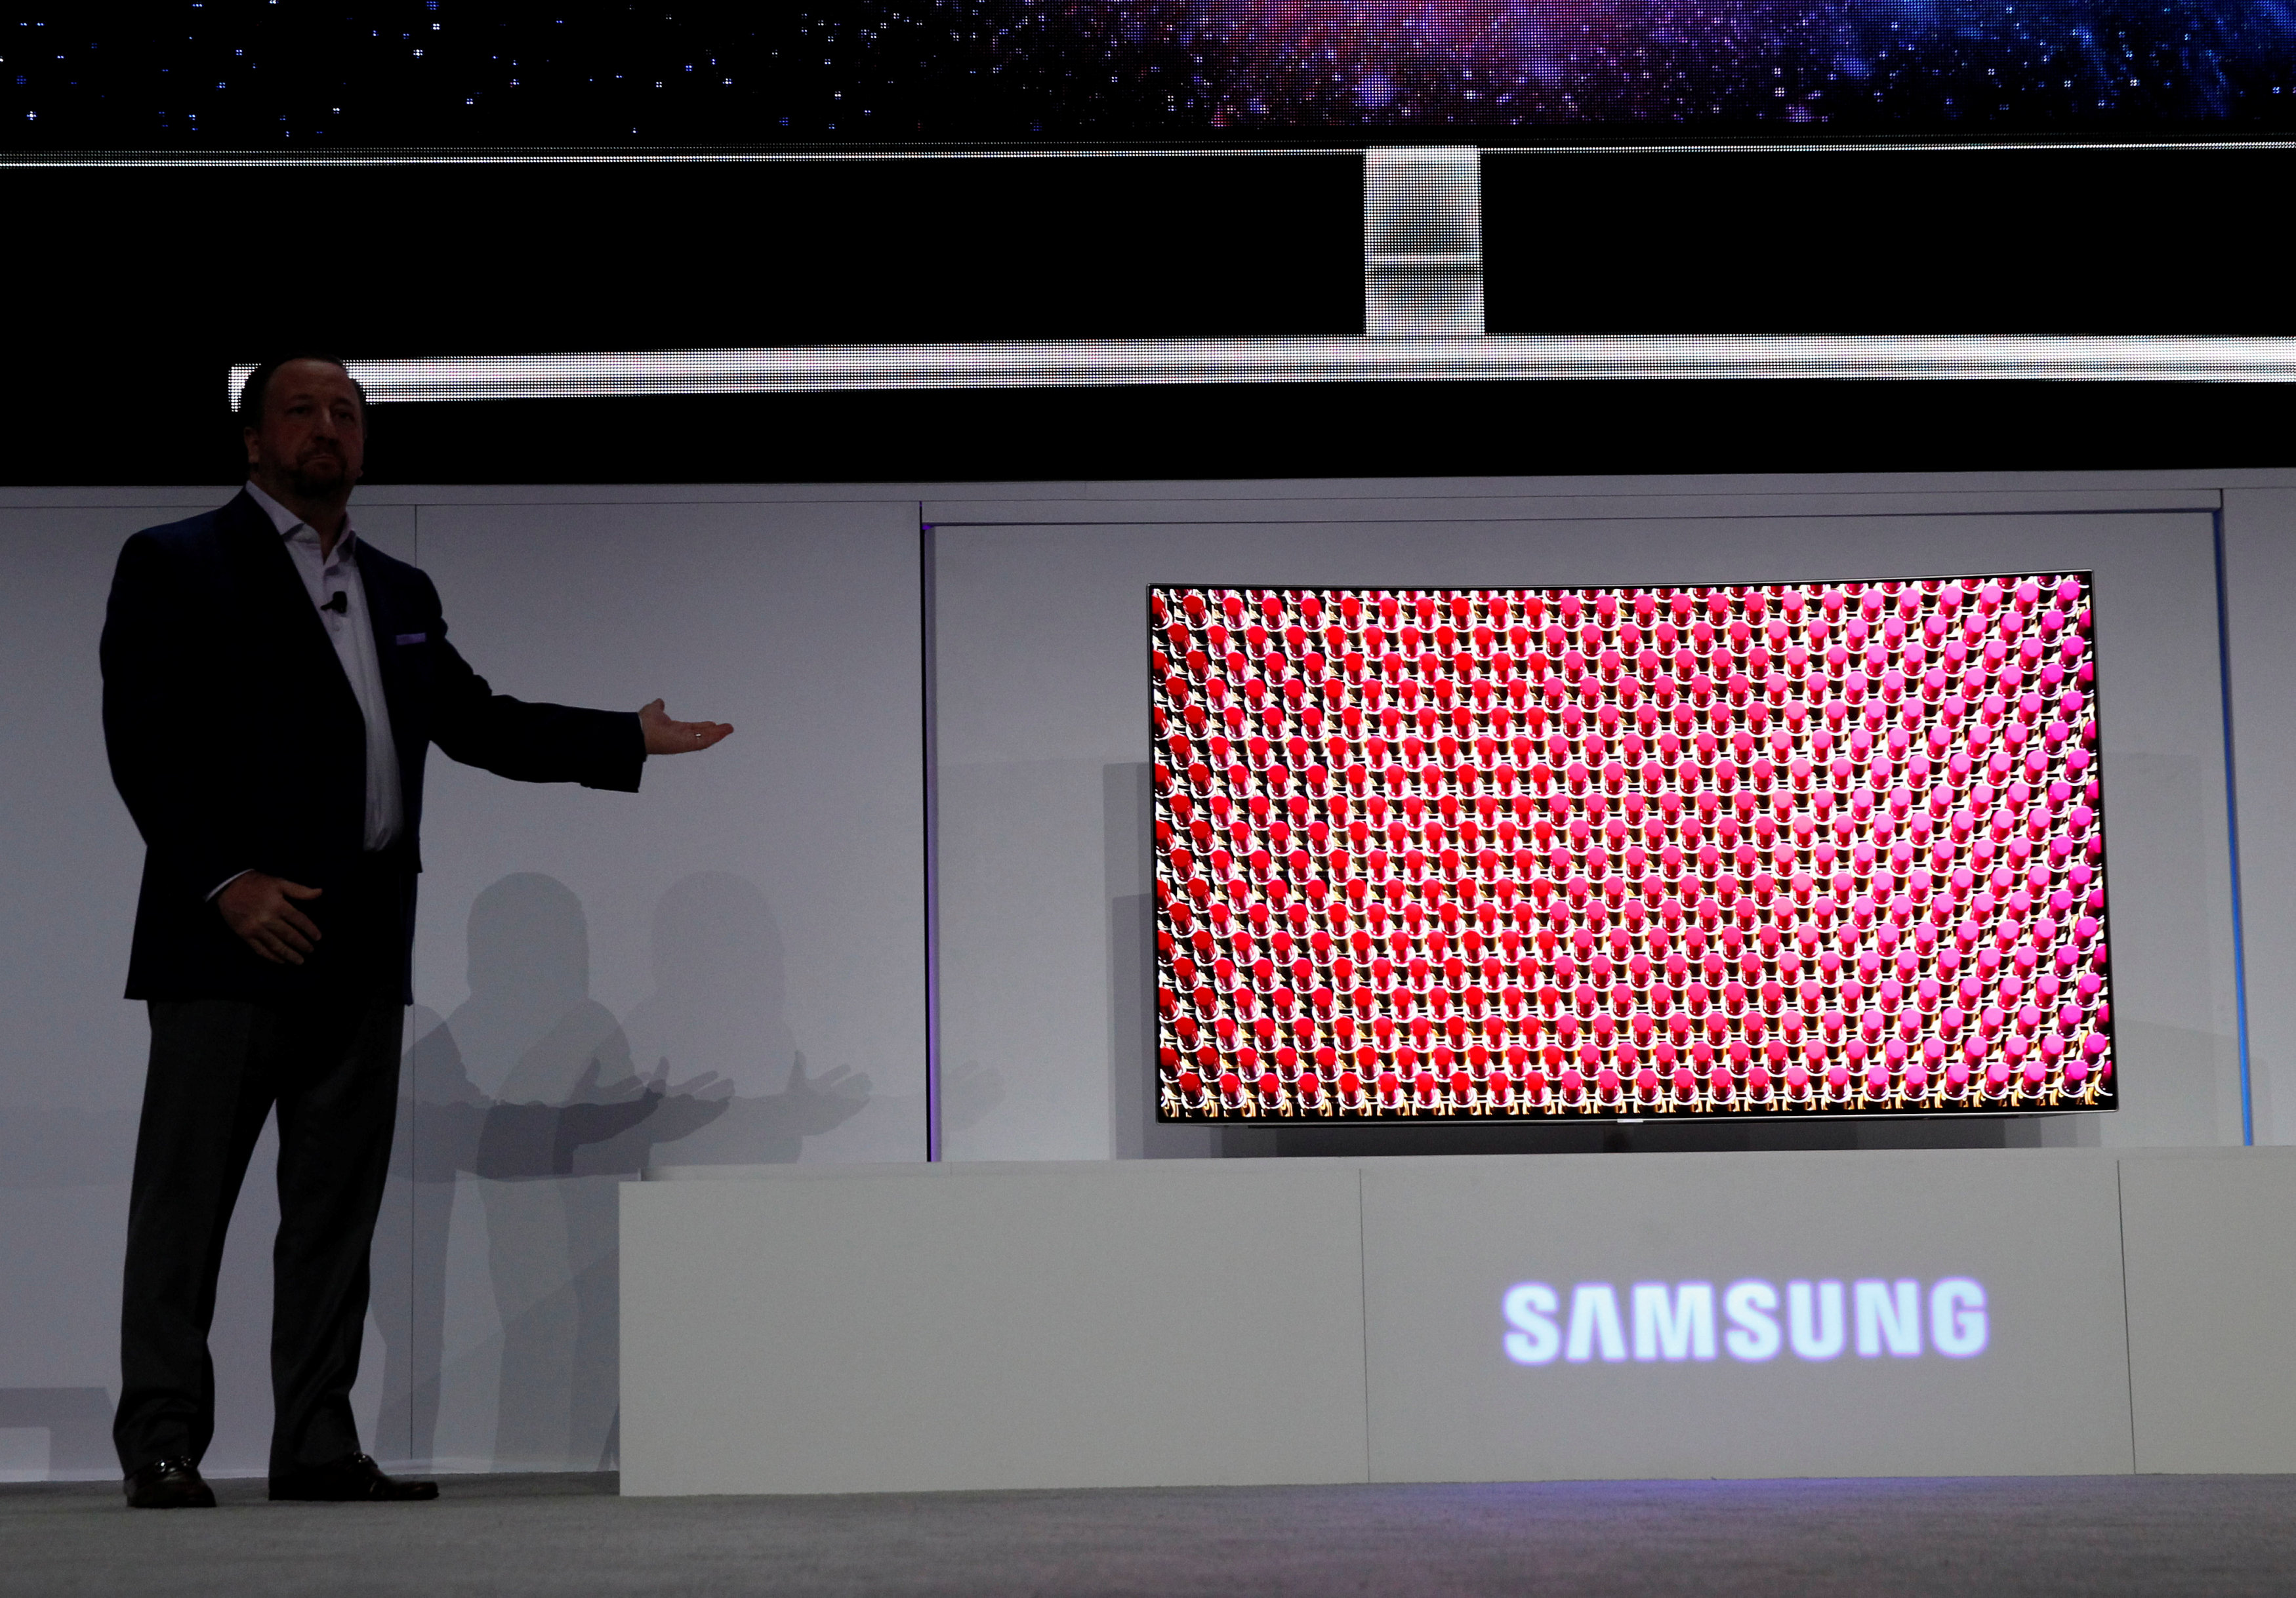 Samsung Mau Bikin Televisi yang Bisa Dikendalikan oleh Pikiran